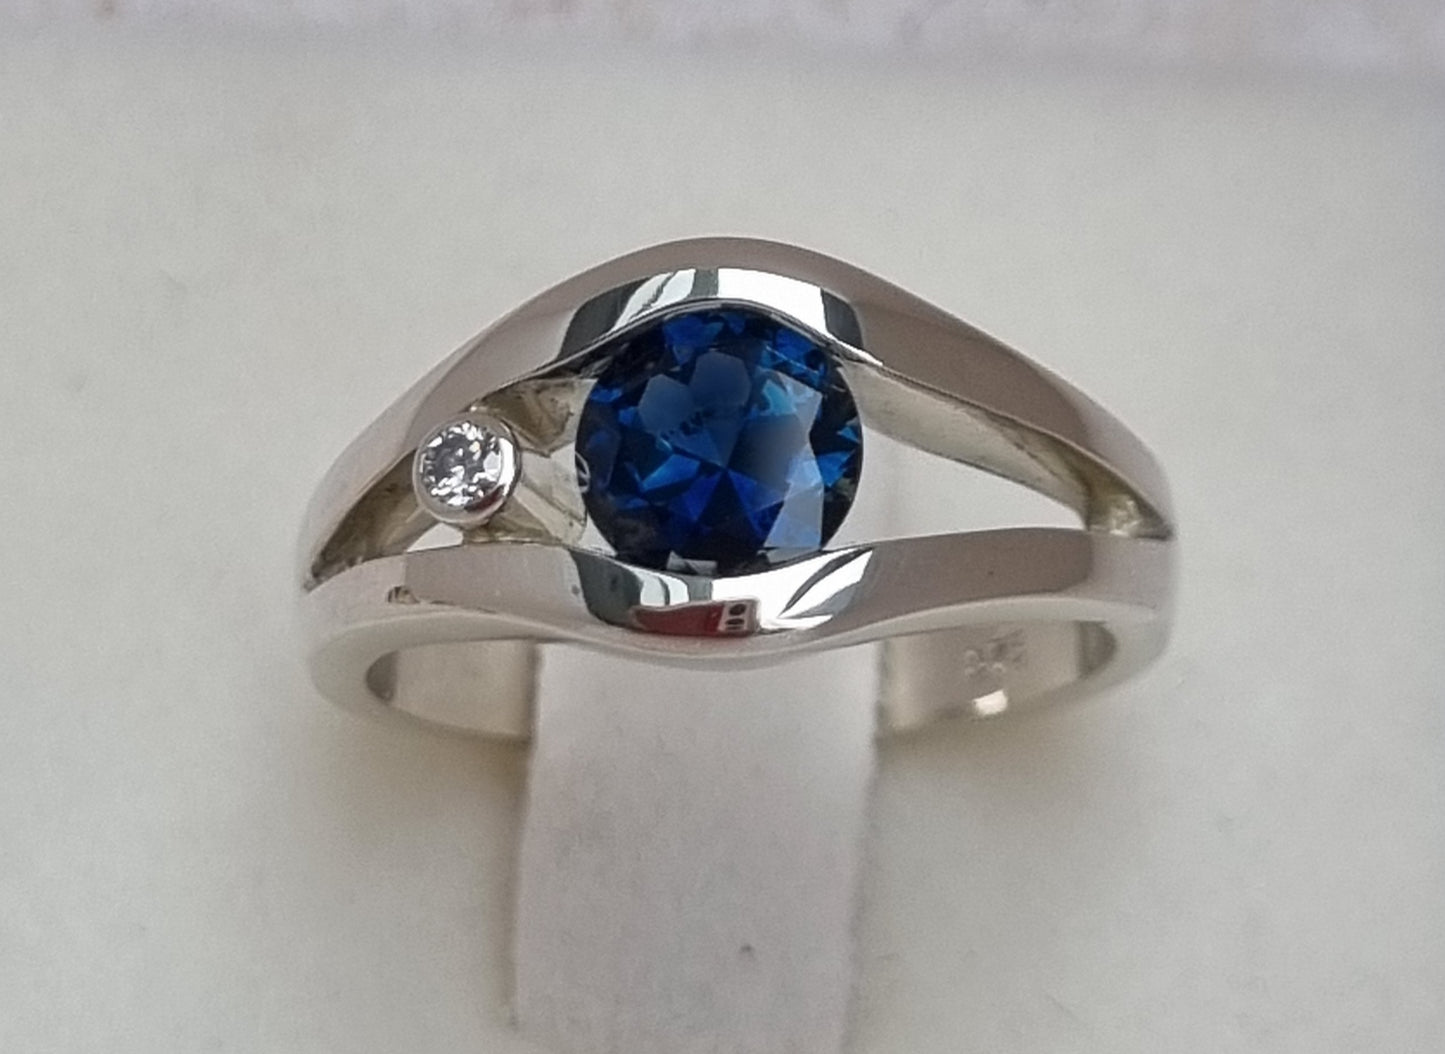 Fine Blue 'Scrub Lead' Sapphire in White Gold Tension Set Ring       Design Ref: EBS466-2